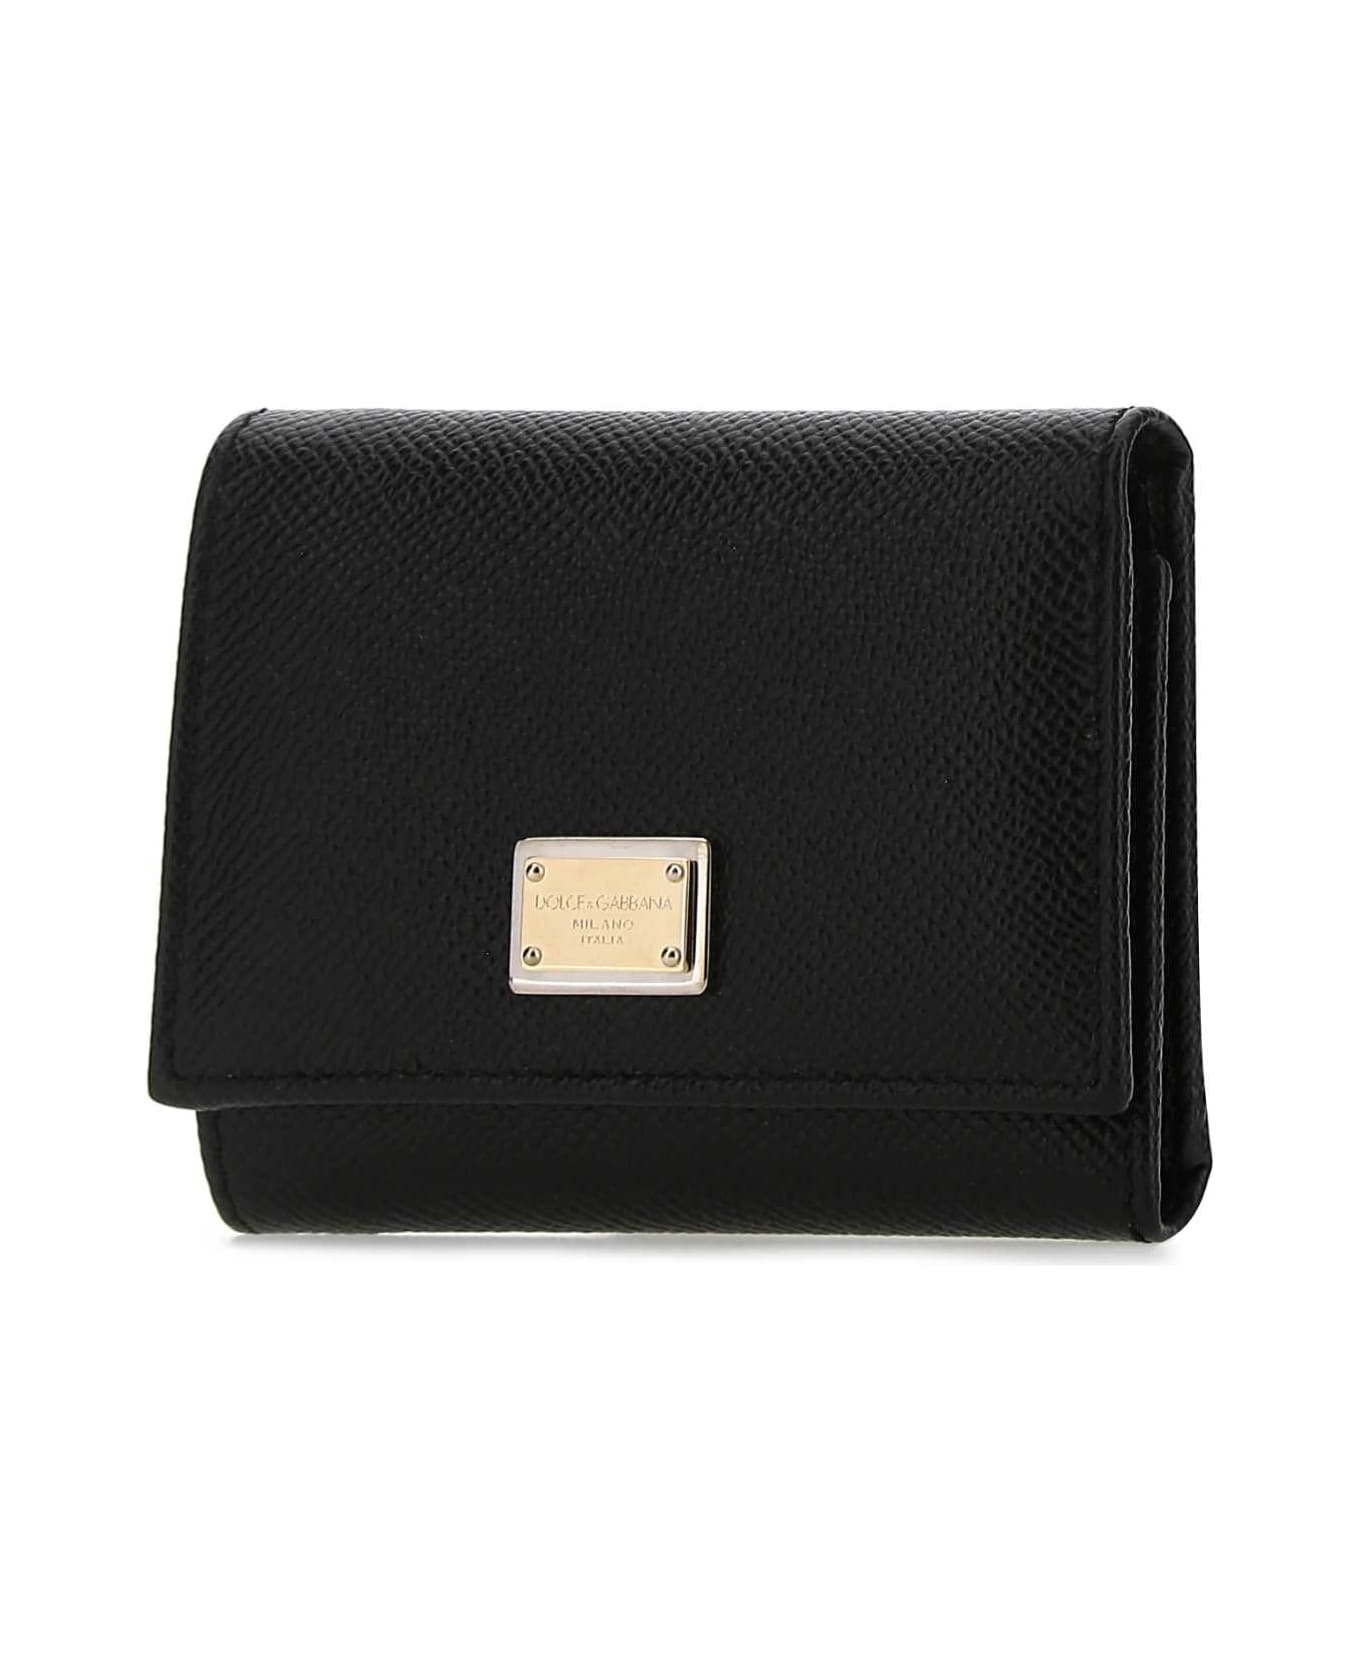 Dolce & Gabbana Black Leather Wallet - 80999